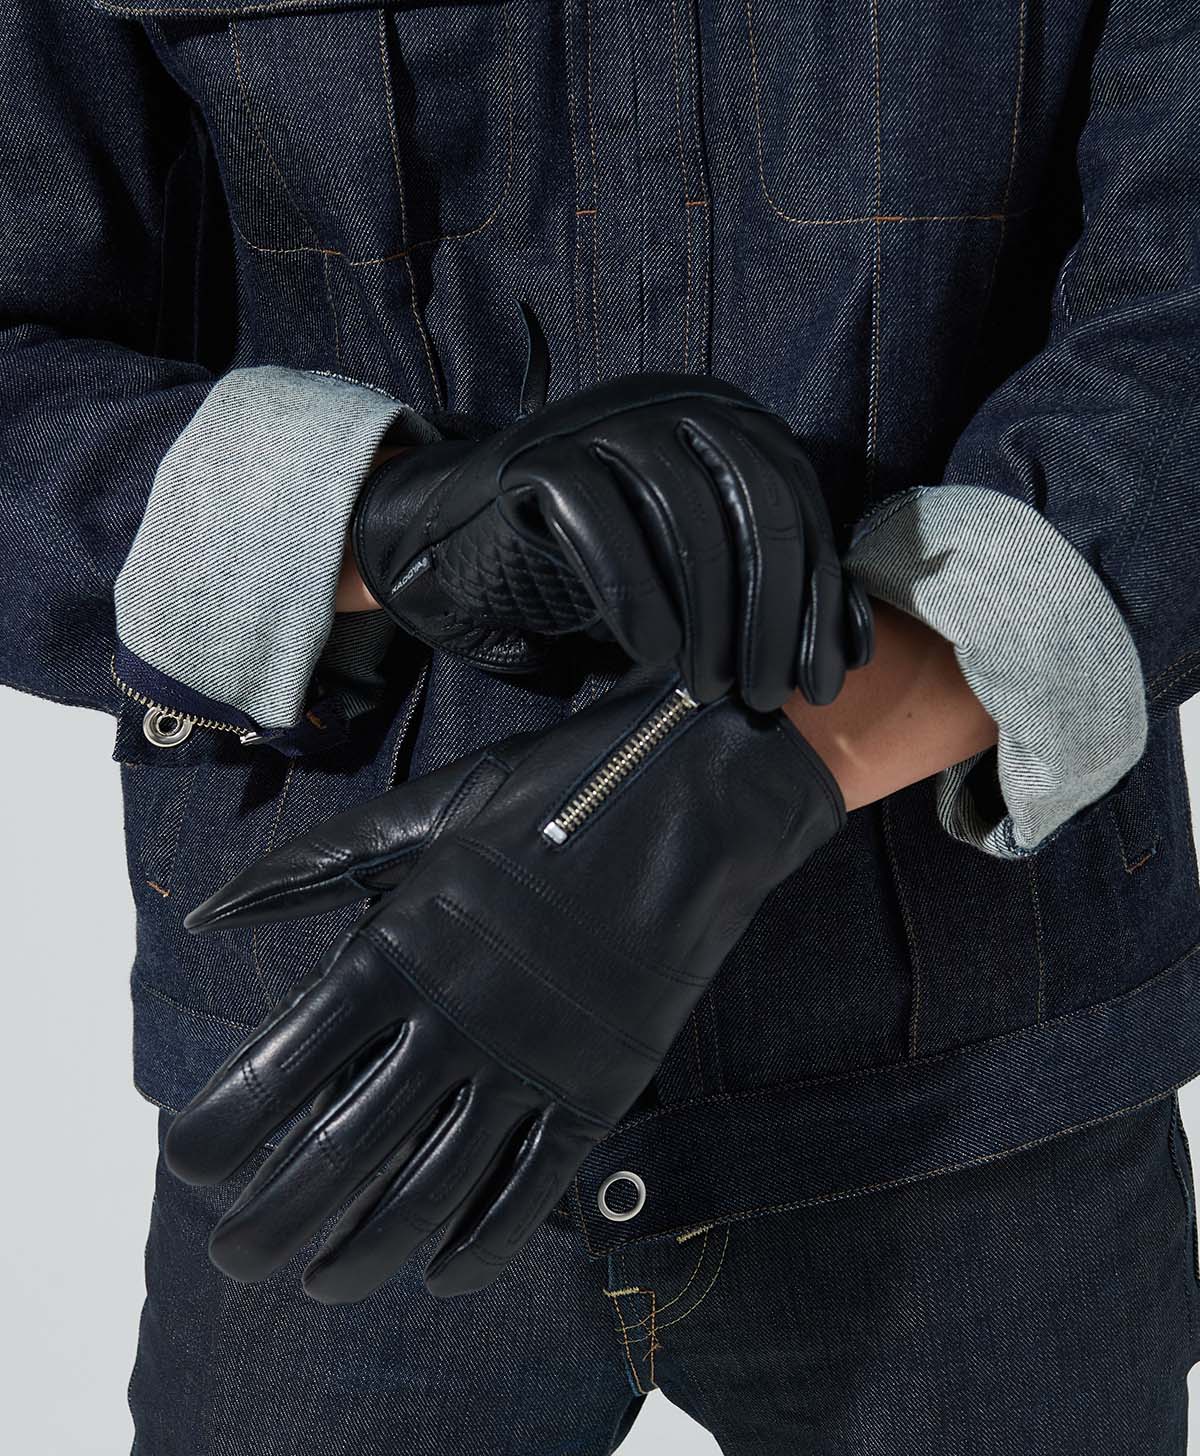 Rox gant / noir